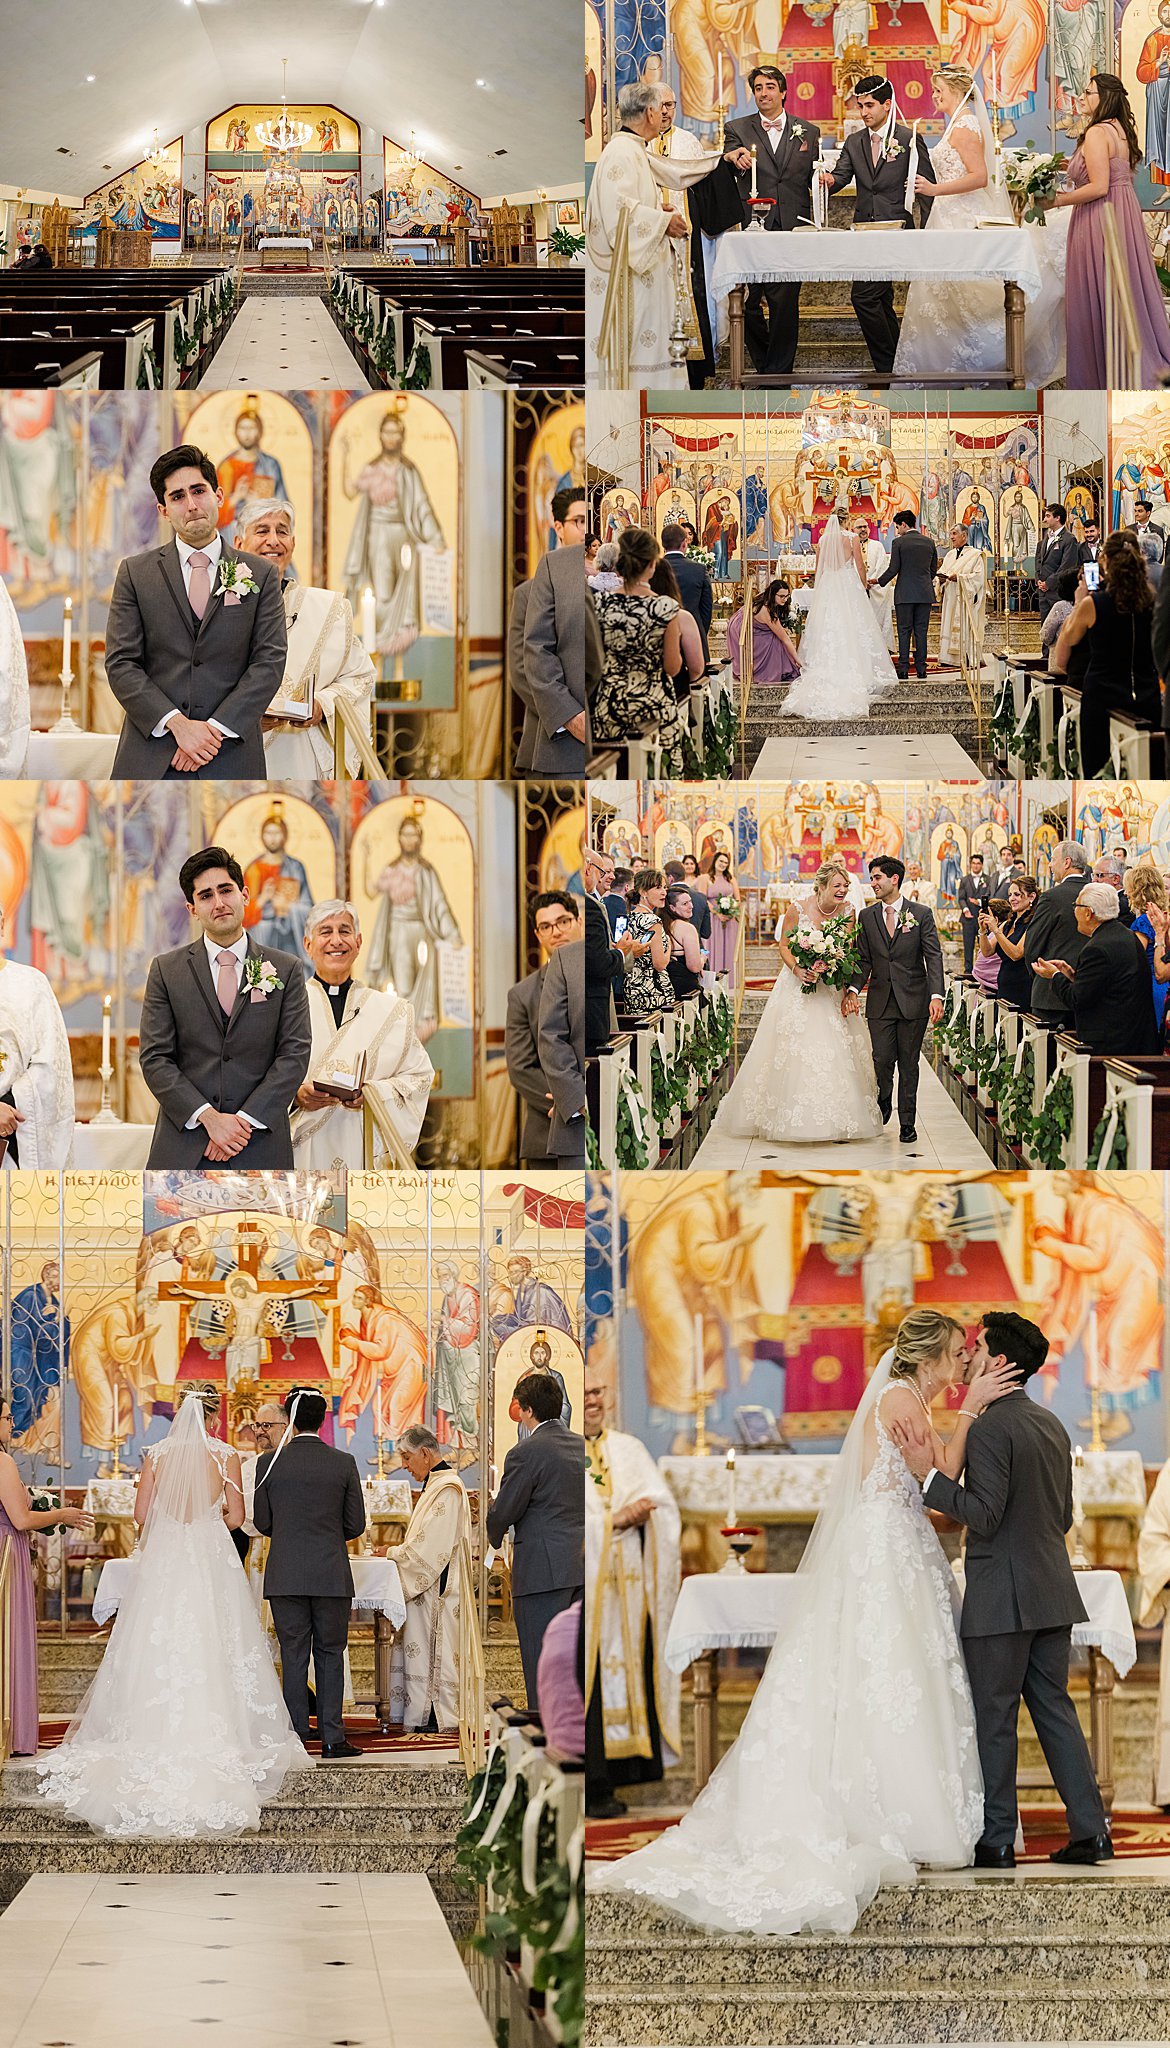 marriage sacrament photos of traditional orthodox wedding ceremony